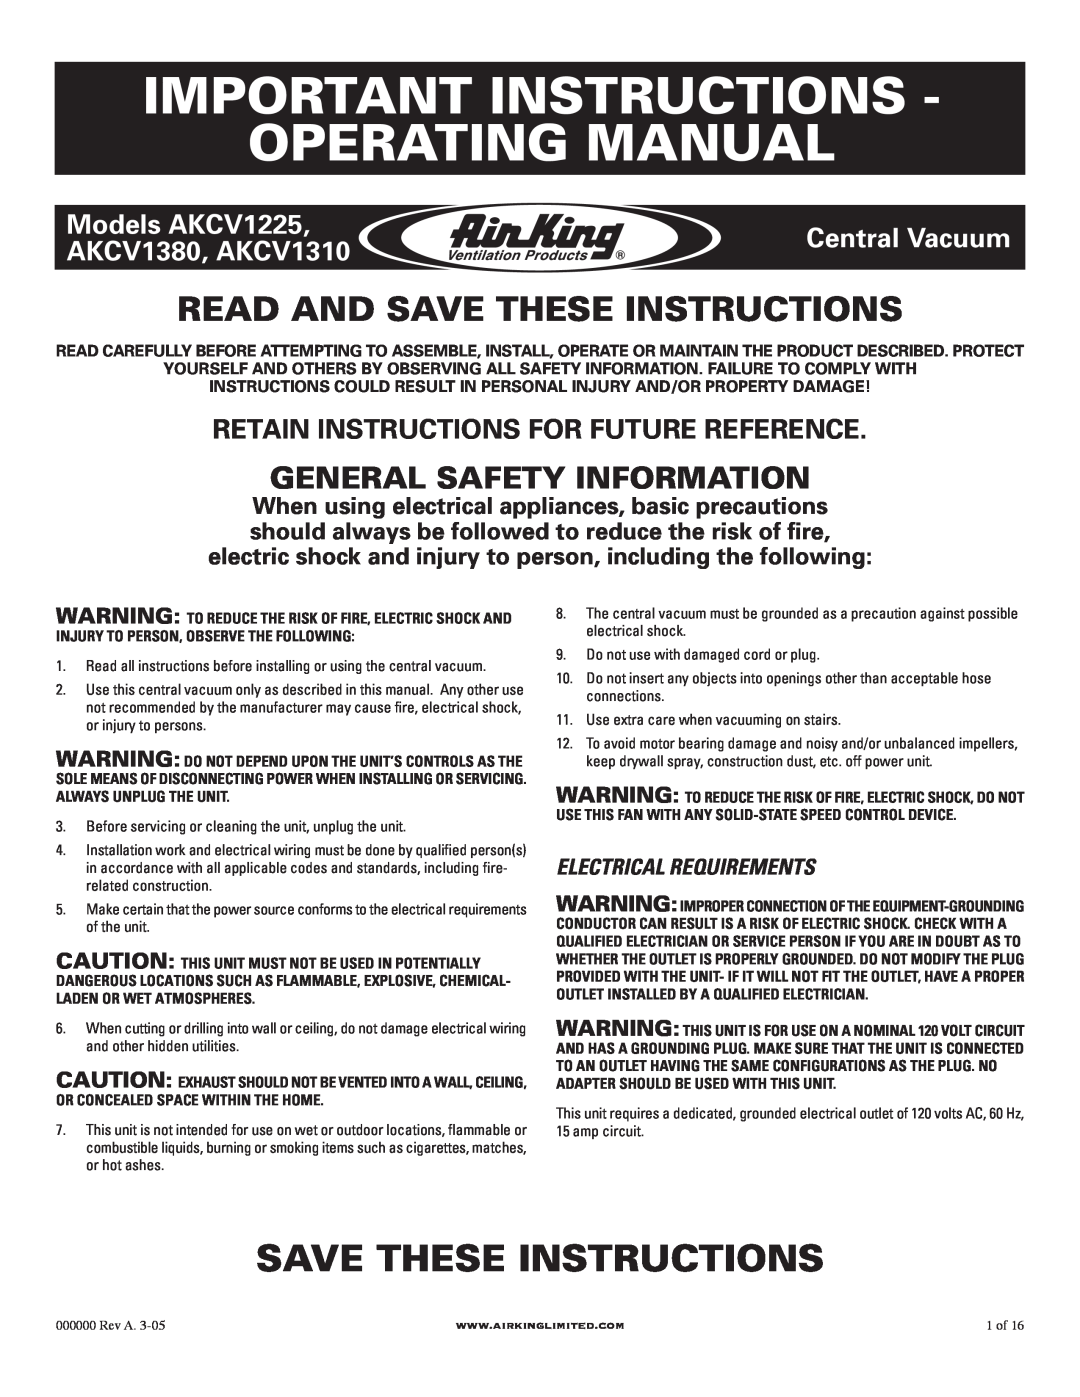 Air King AKCV1380 manual Important Instructions Operating Manual, Save These Instructions, General Safety Information 